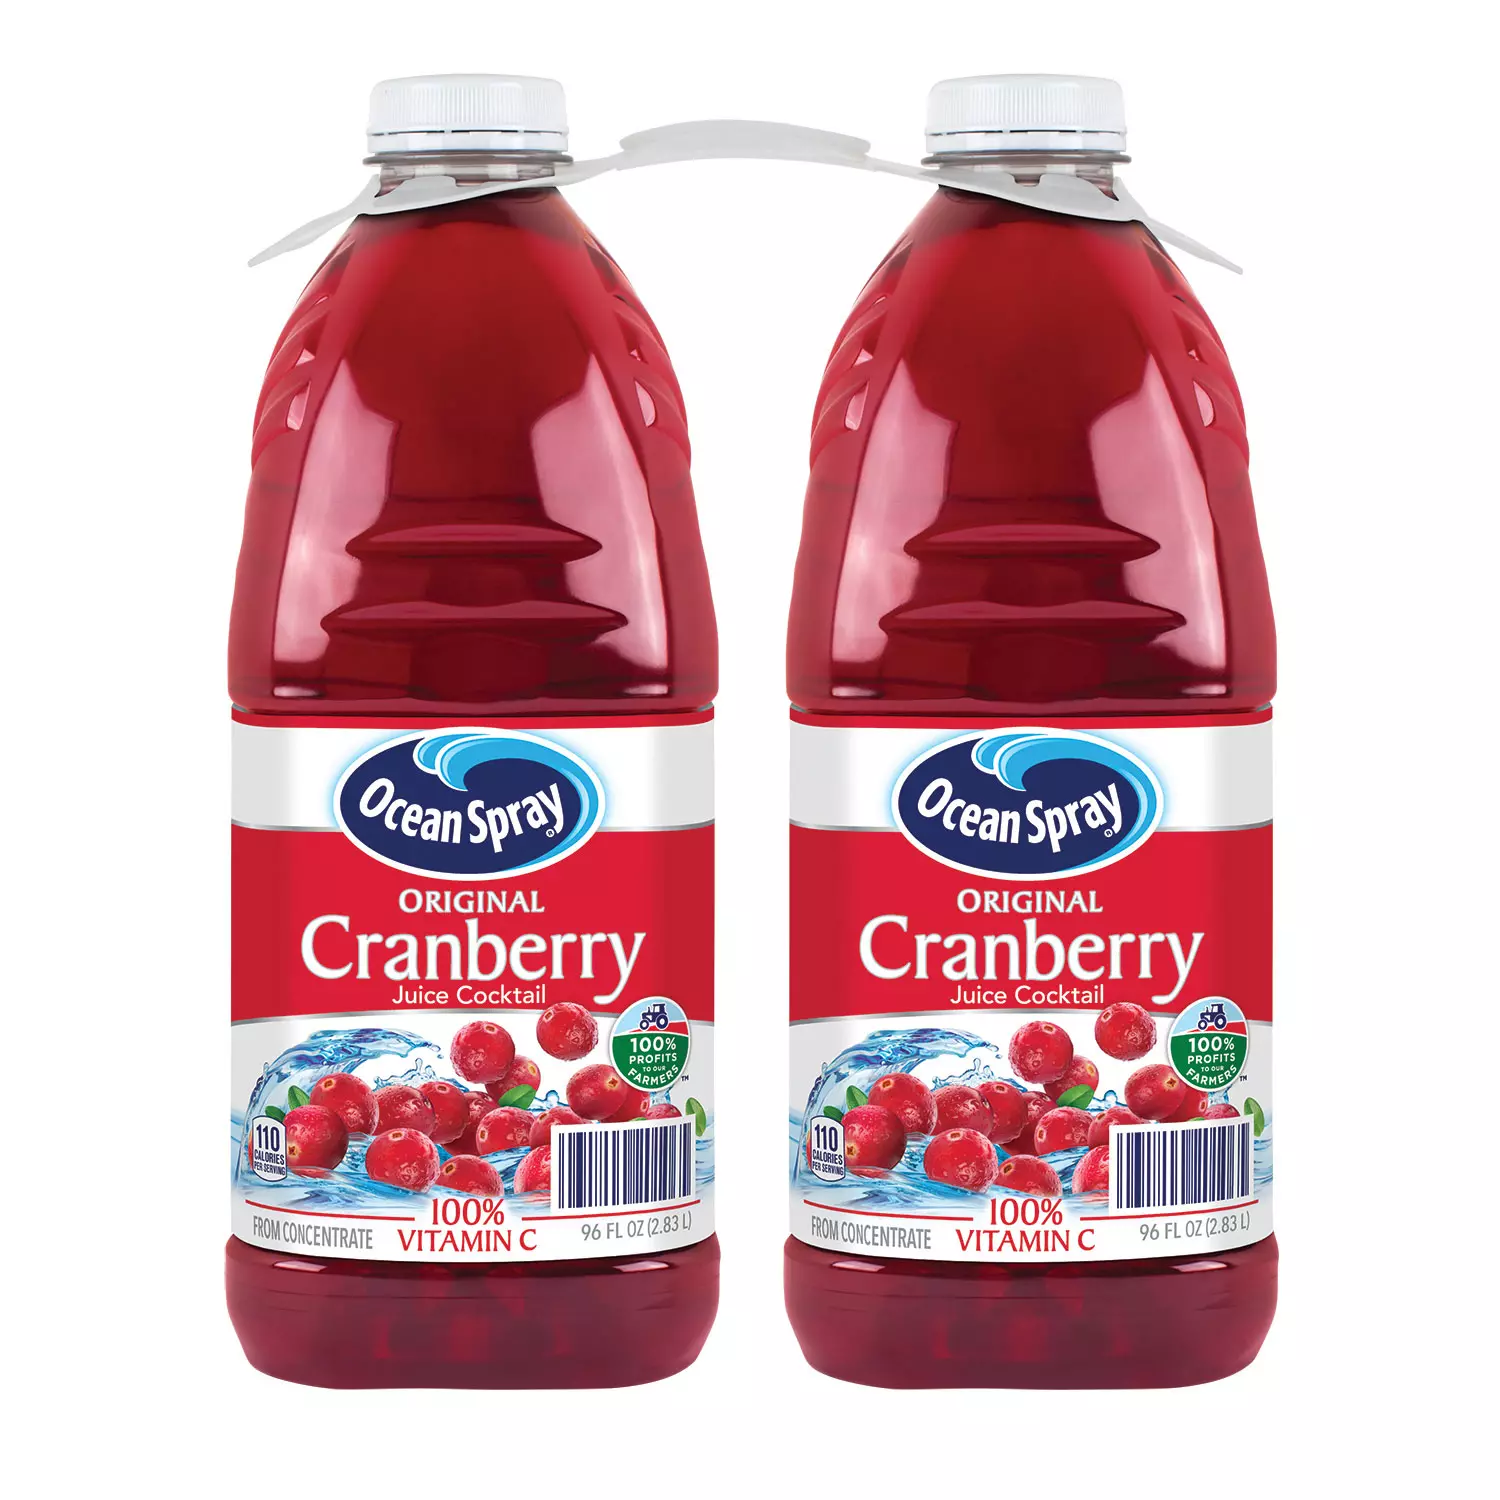 Ocean Spray Cranberry Cocktail Juice